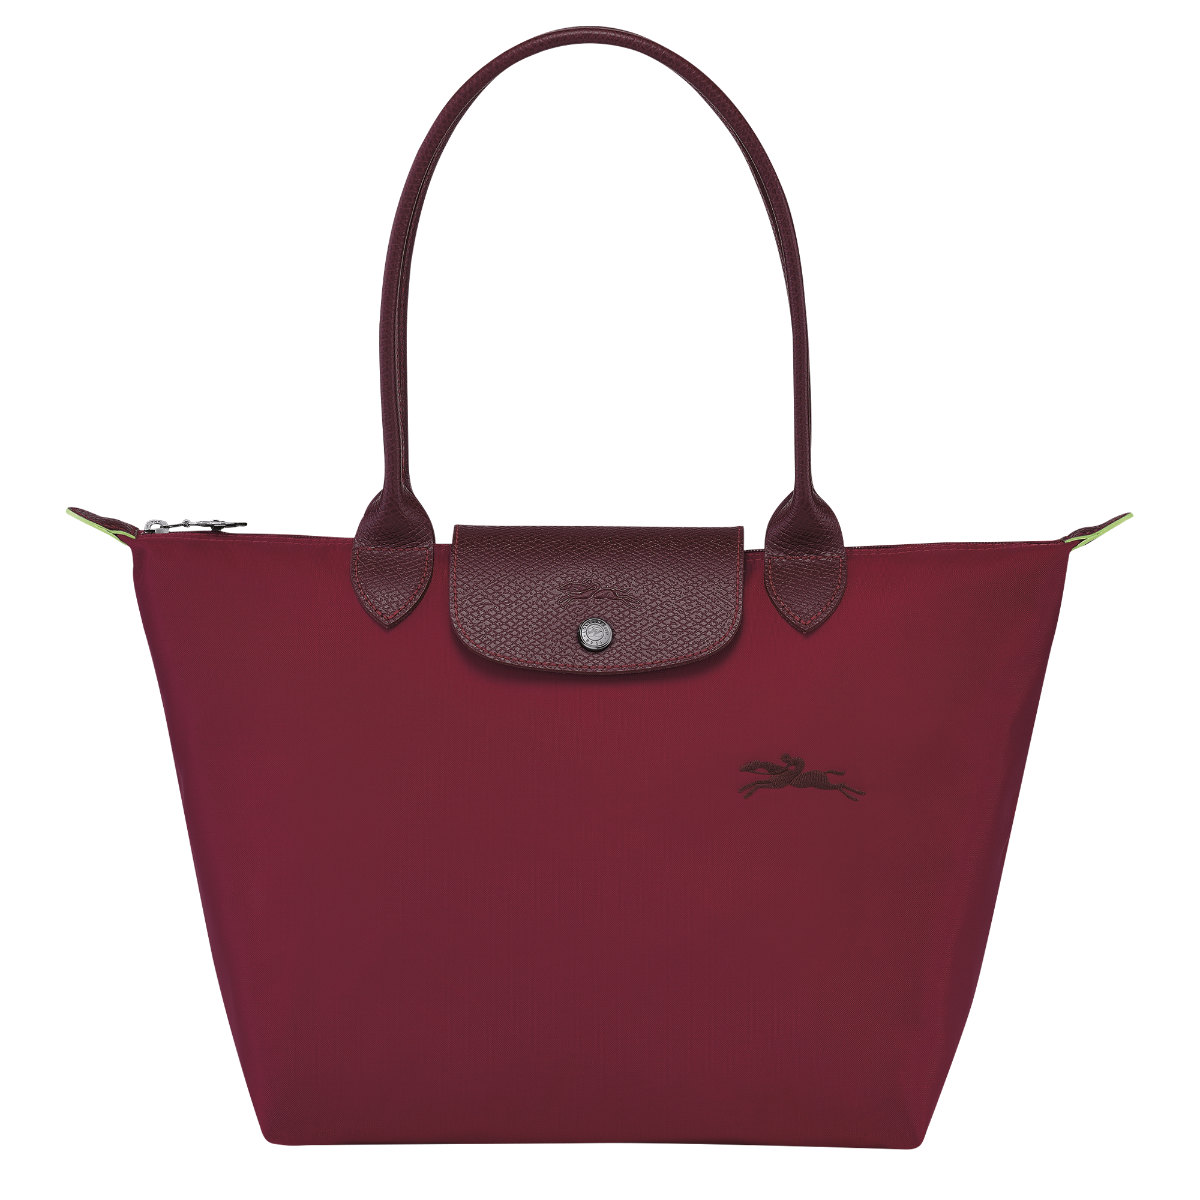 Longchamp: “It Is Not A Bag. It Is Le Pliage®” - Luxferity